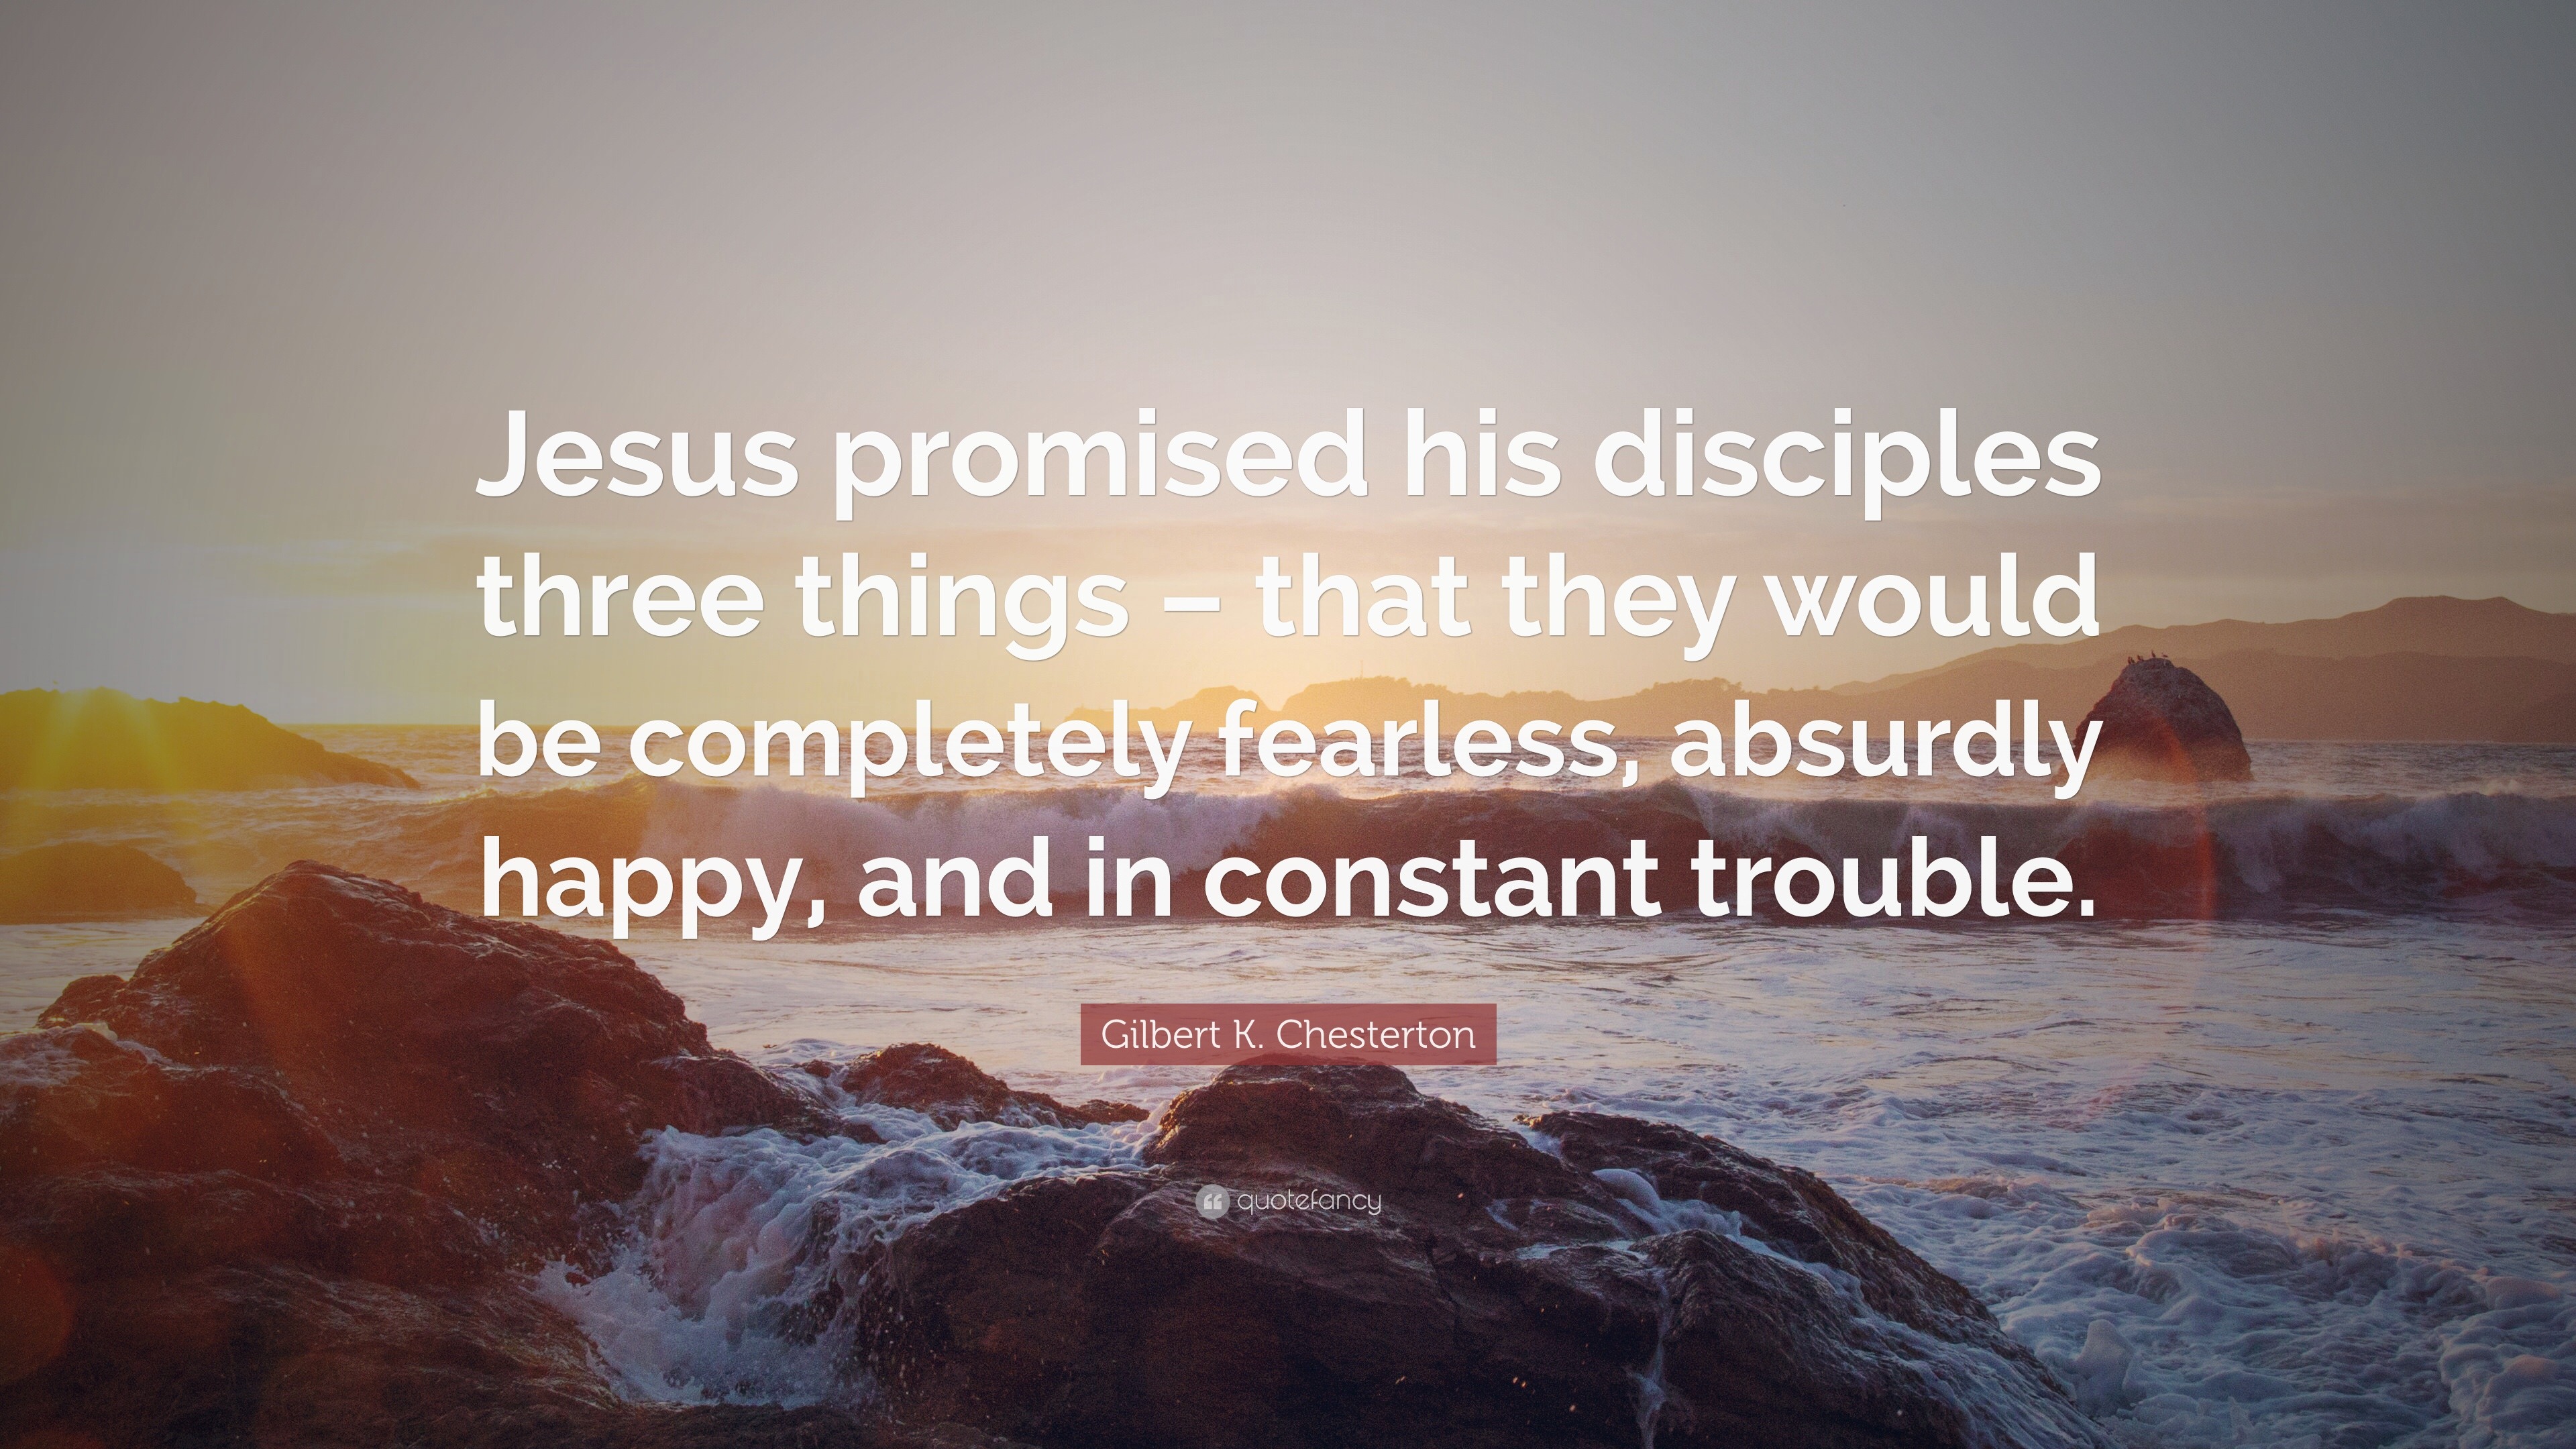 Gilbert K. Chesterton Quote: "Jesus promised his disciples ...